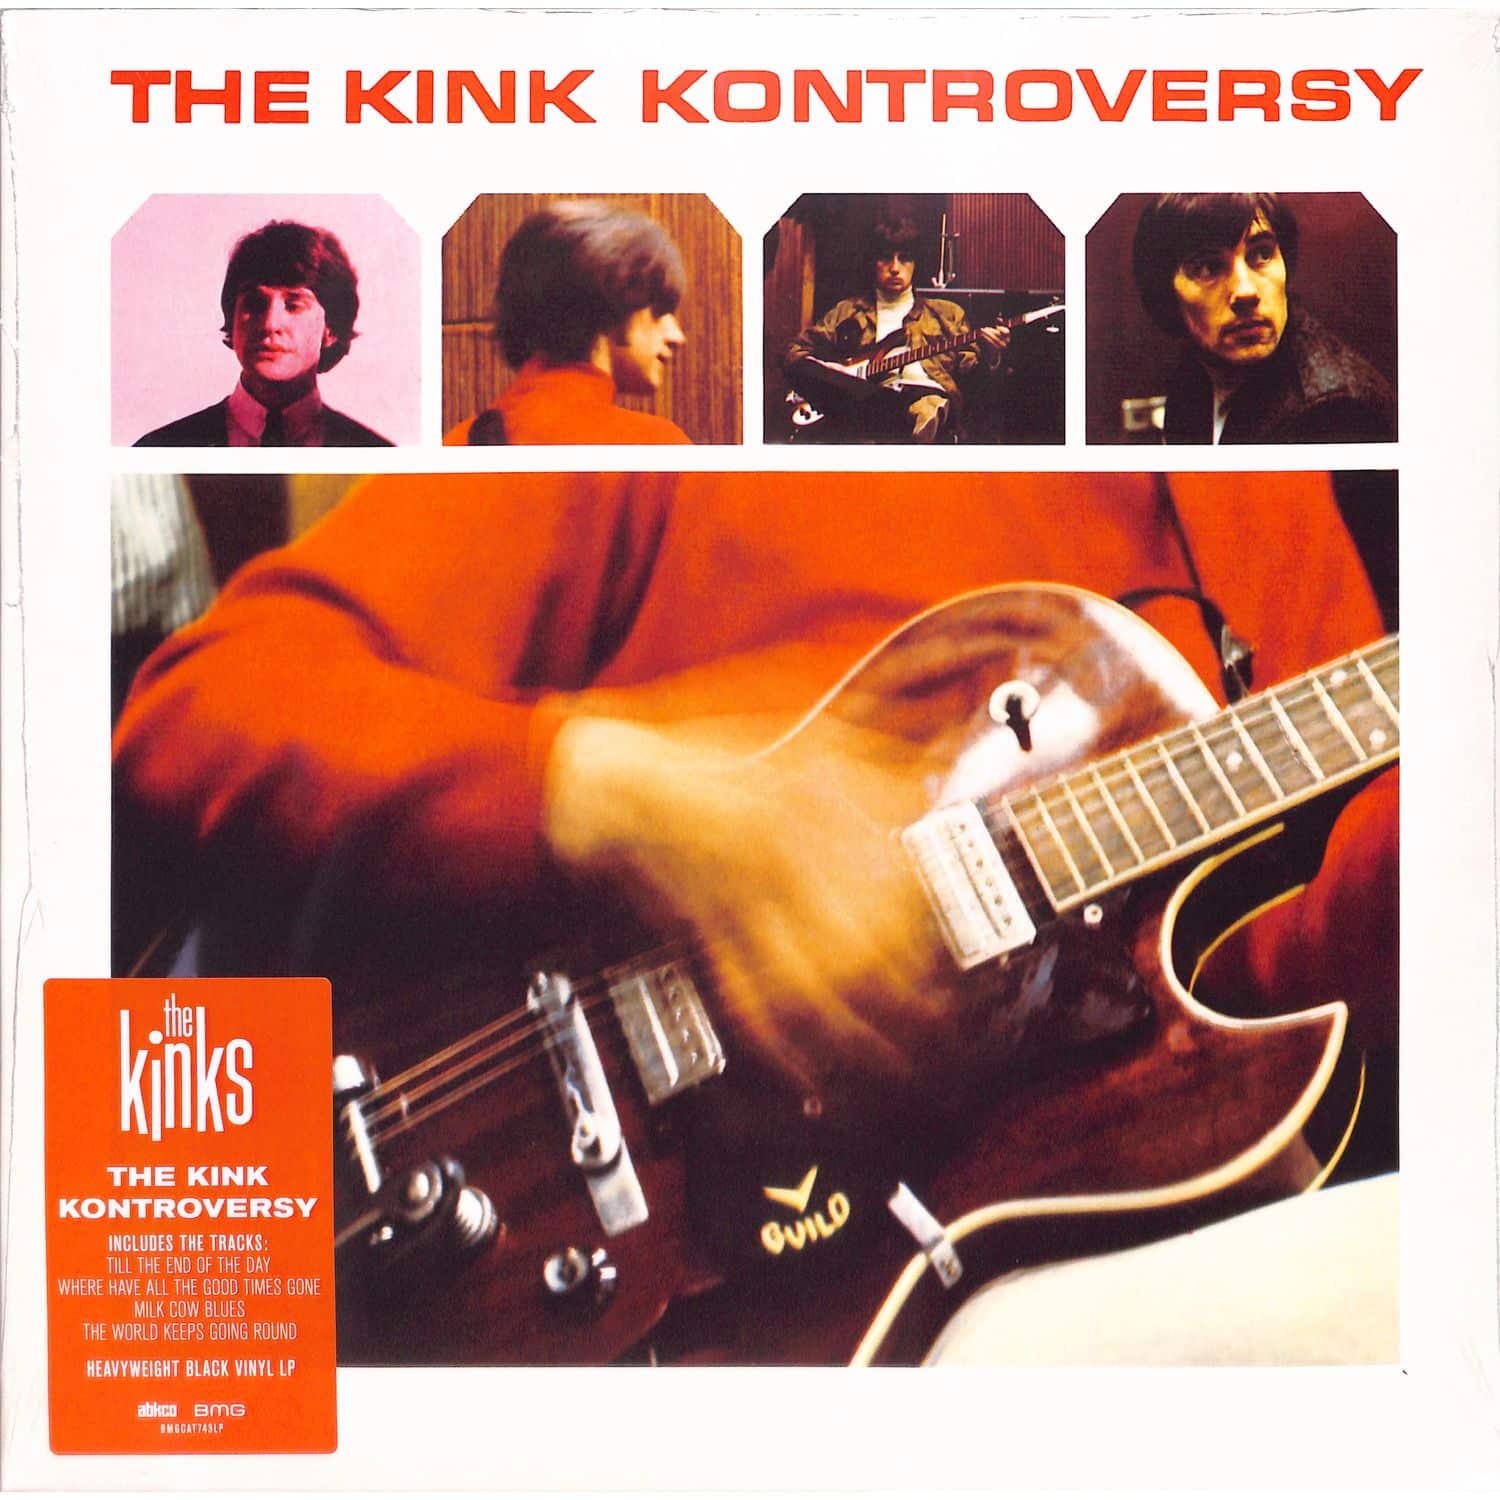 The Kinks - THE KINK KONTROVERSY 